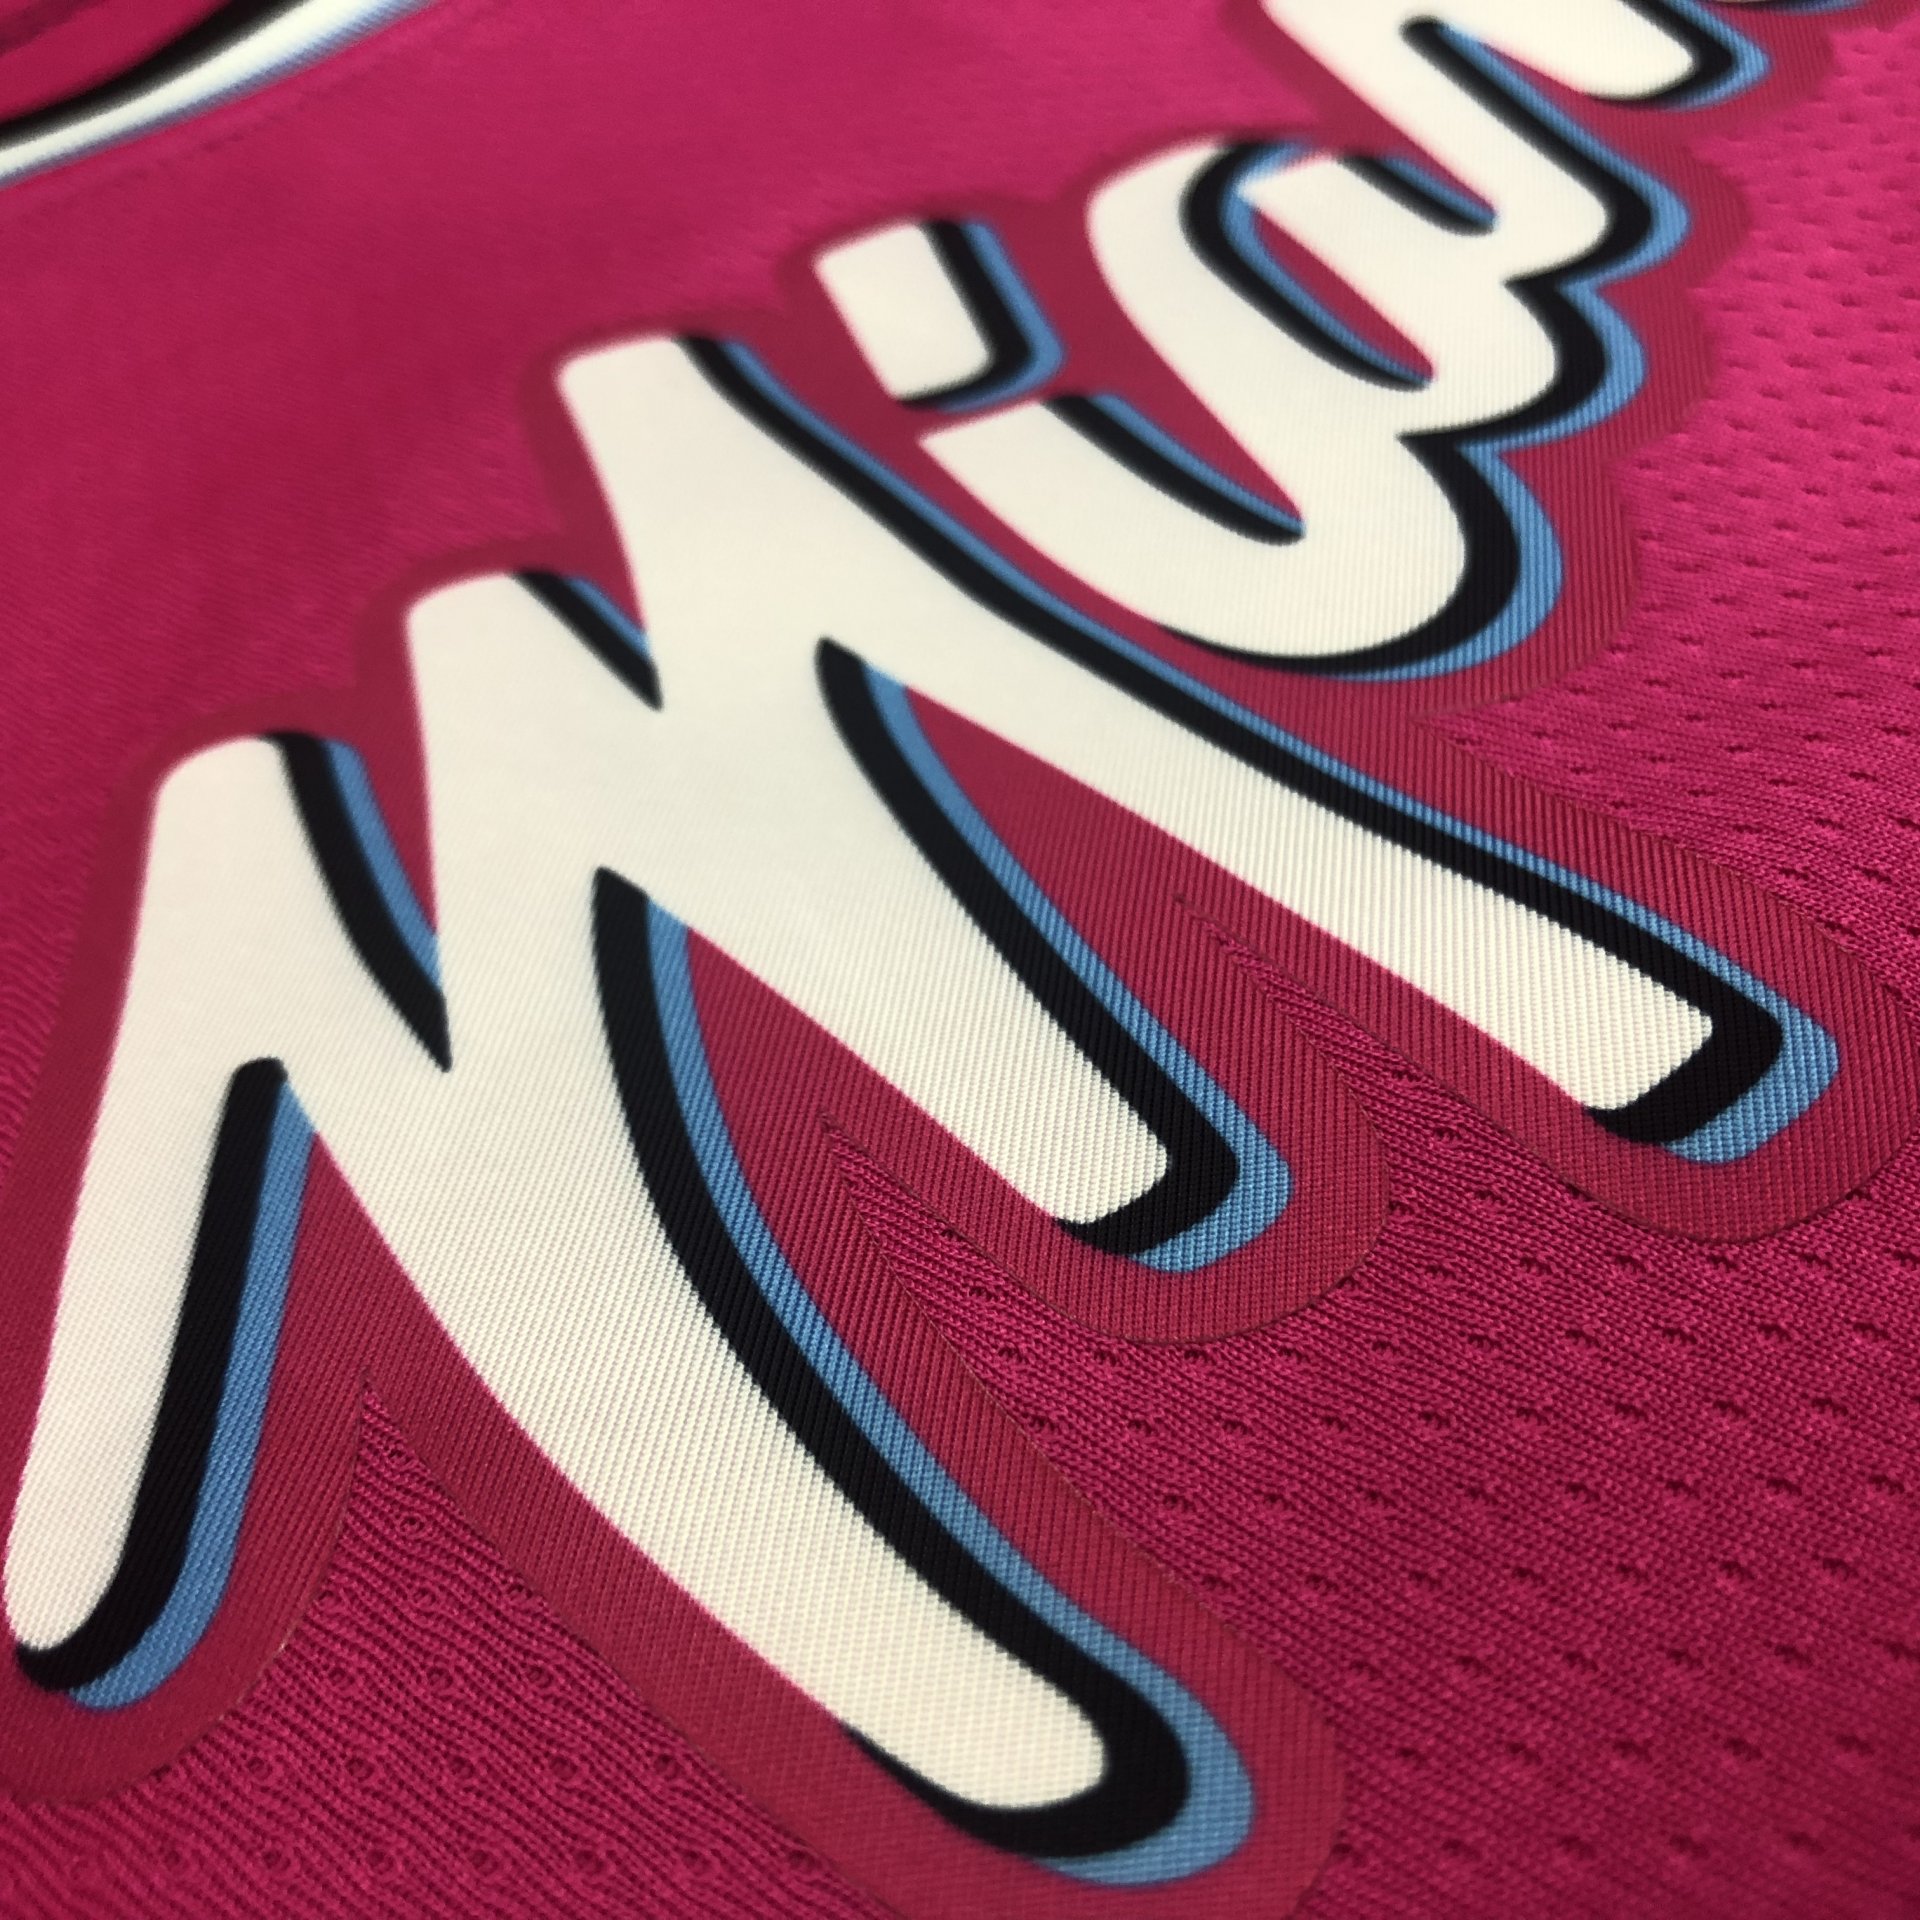 TYLER HERRO #14 Miami Heat Vice Versa City Edition Jersey Pink